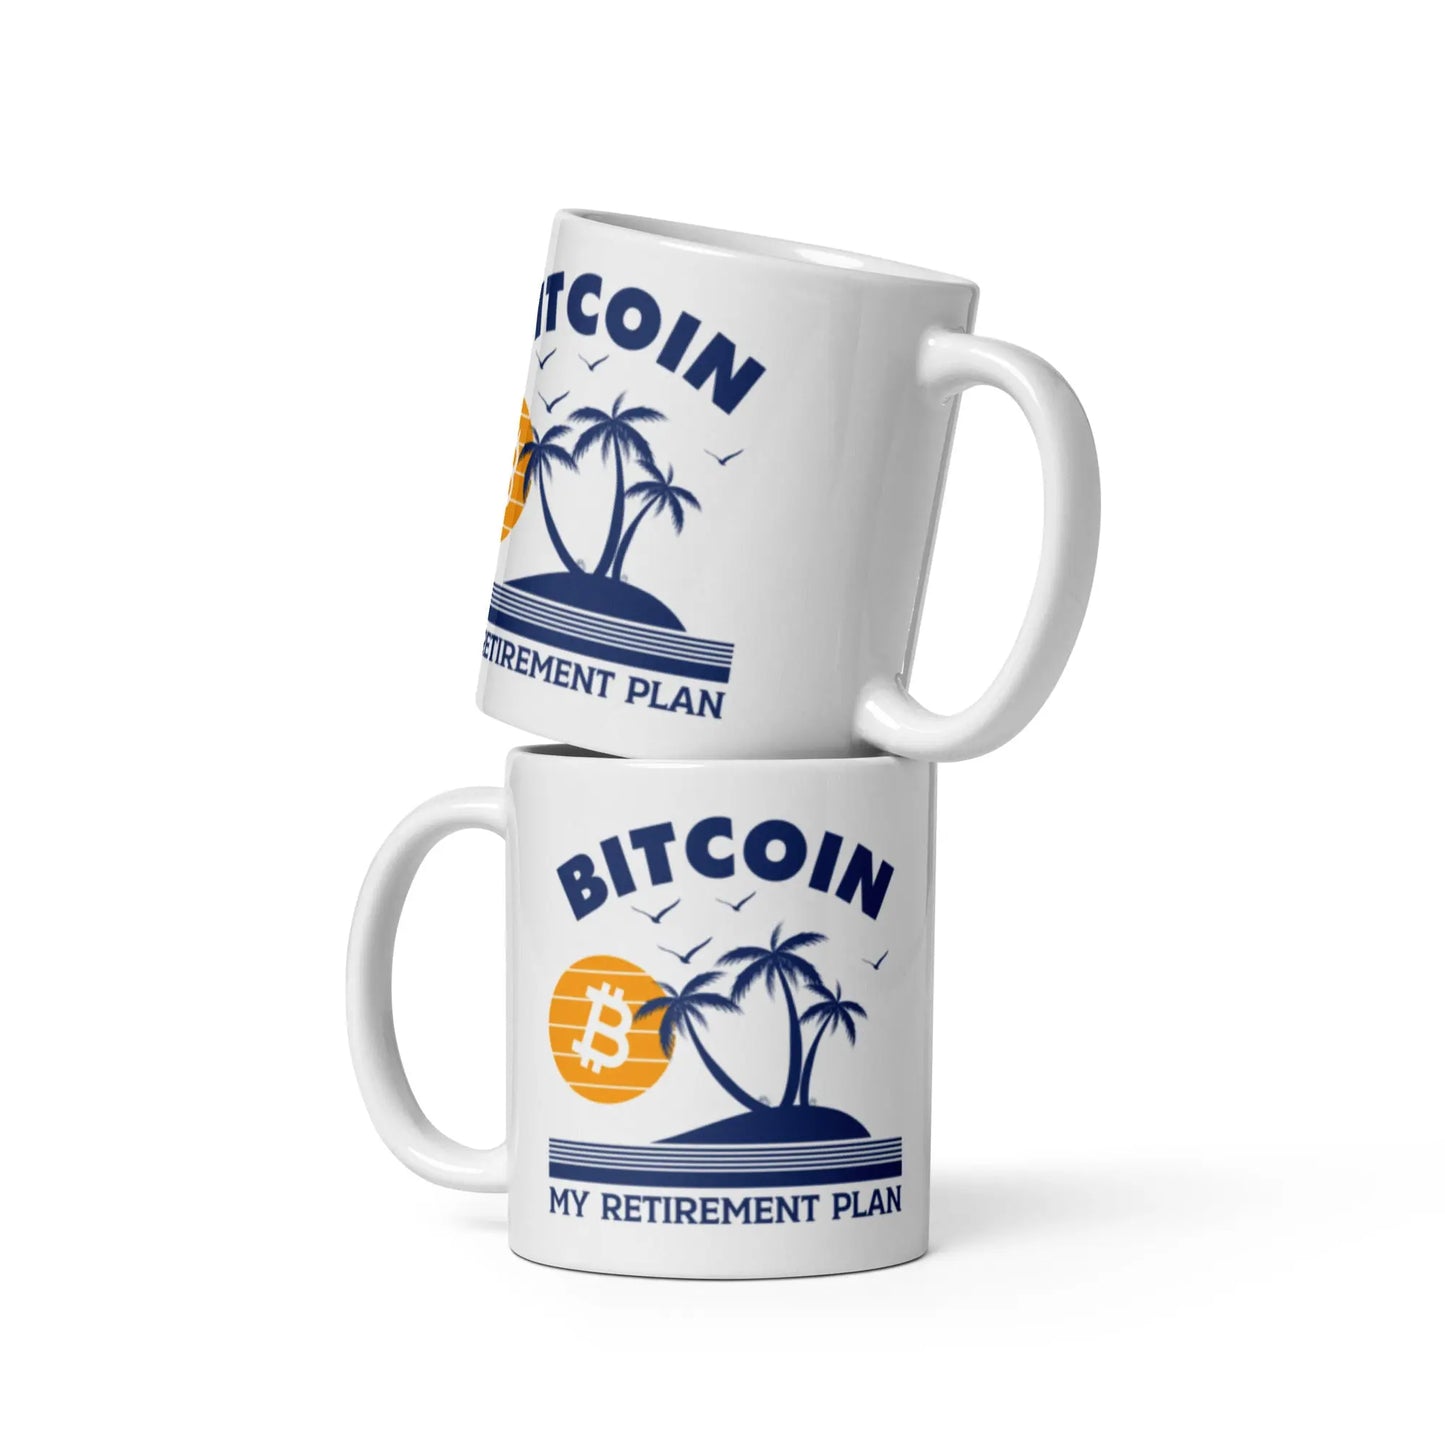 My Retirement Plan - Glossy Bitcoin Mug Store of Value